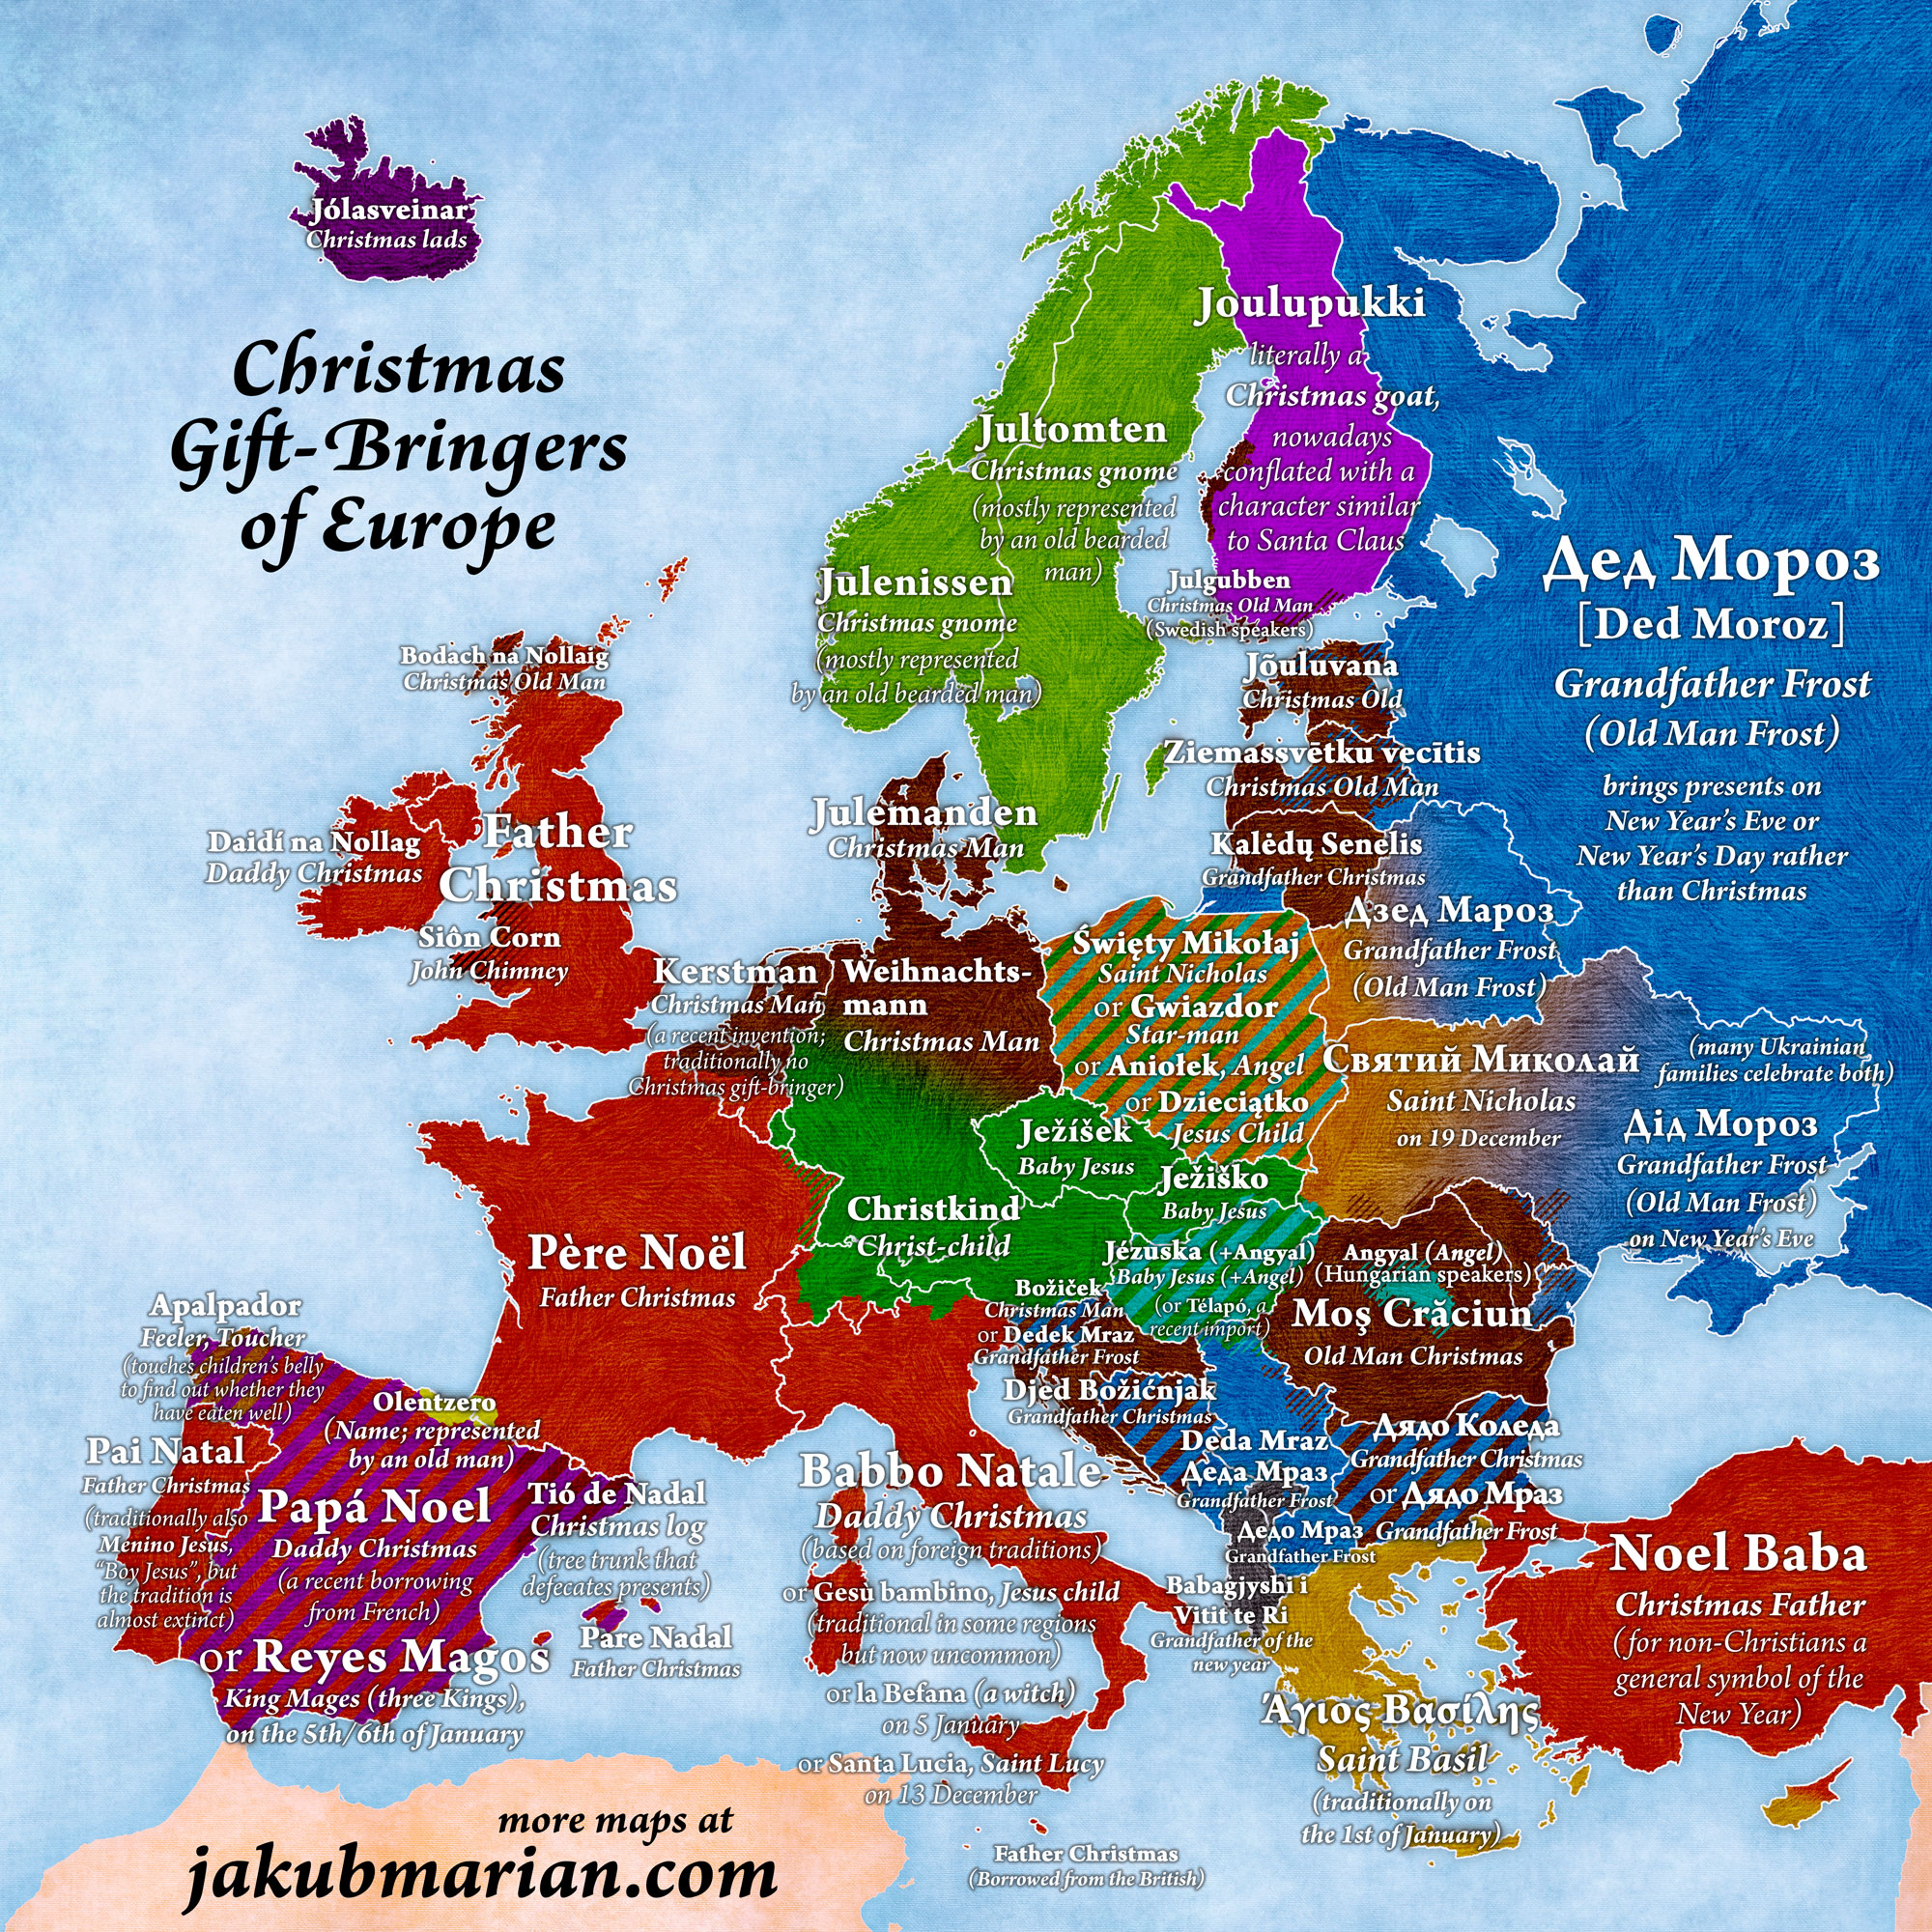 https://jakubmarian.com/wp-content/uploads/2015/12/christmas-gift-bringers-europe.jpg